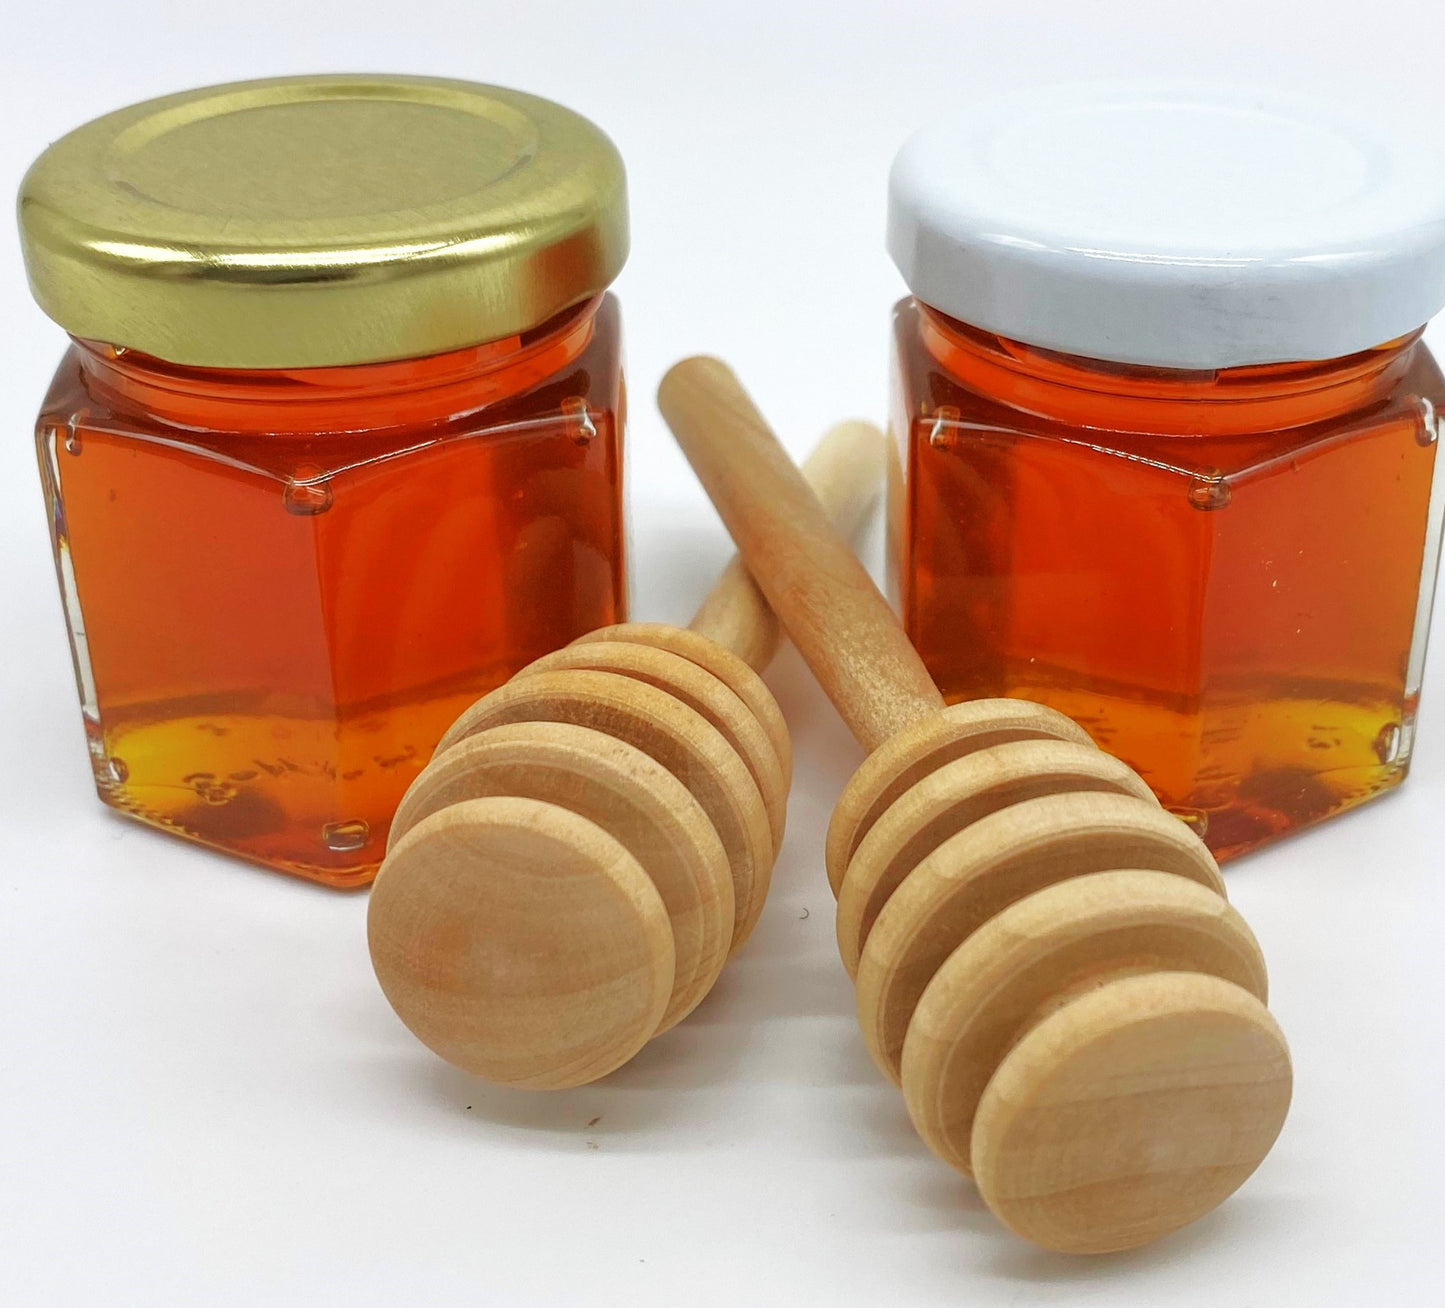 Mini Hexagon Honey Jar -24 mini jars per case